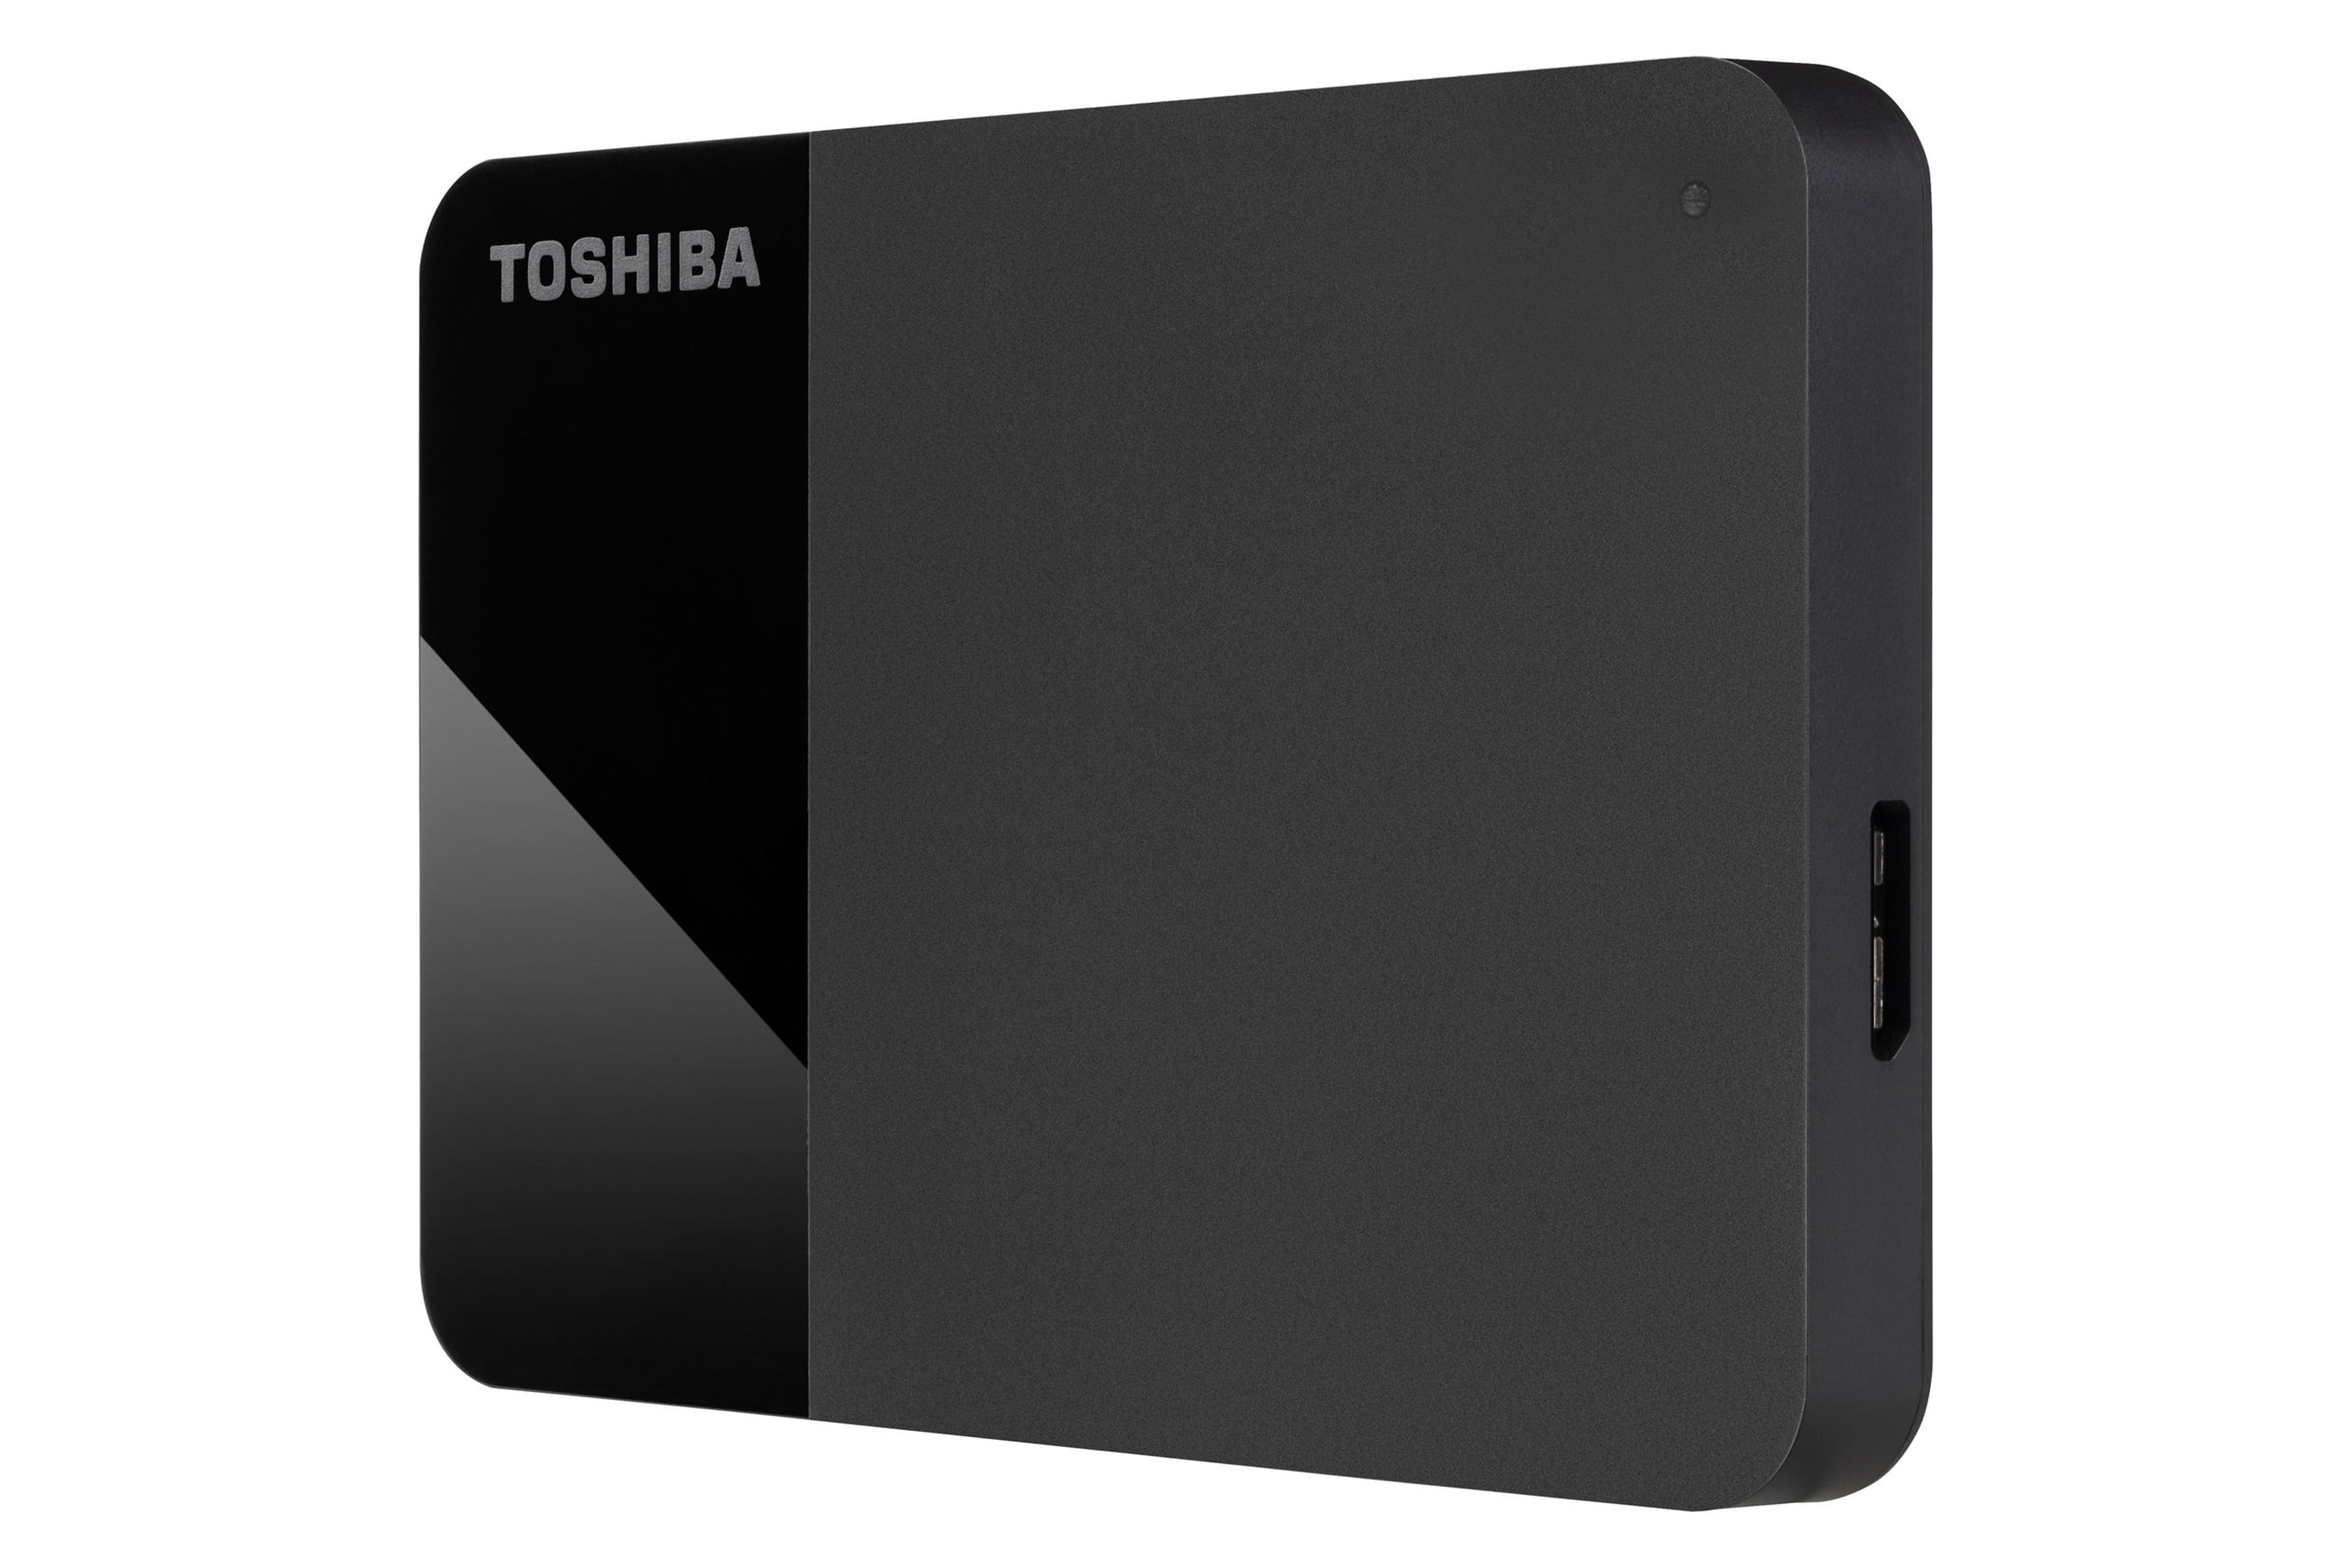 Toshiba Canvio Ready Portable External Hard Drive 1TB Black - image 1 of 5